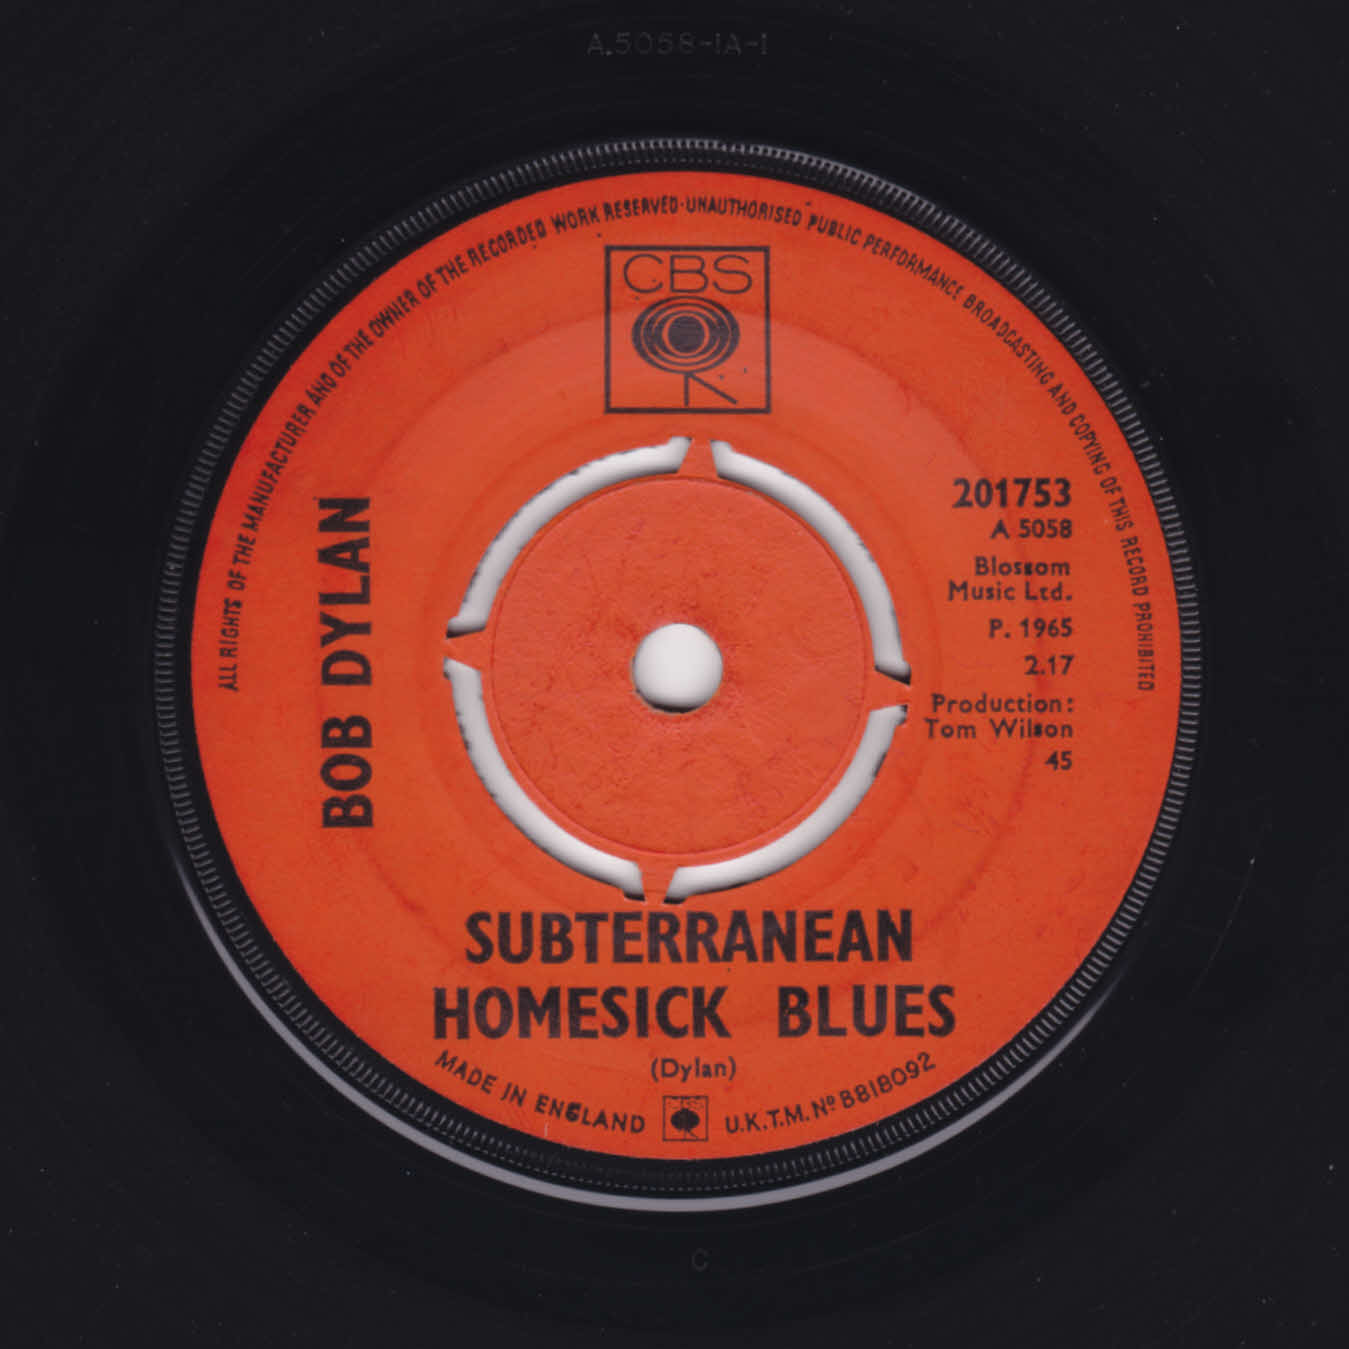 Subterranean Homesick Blues - UK single